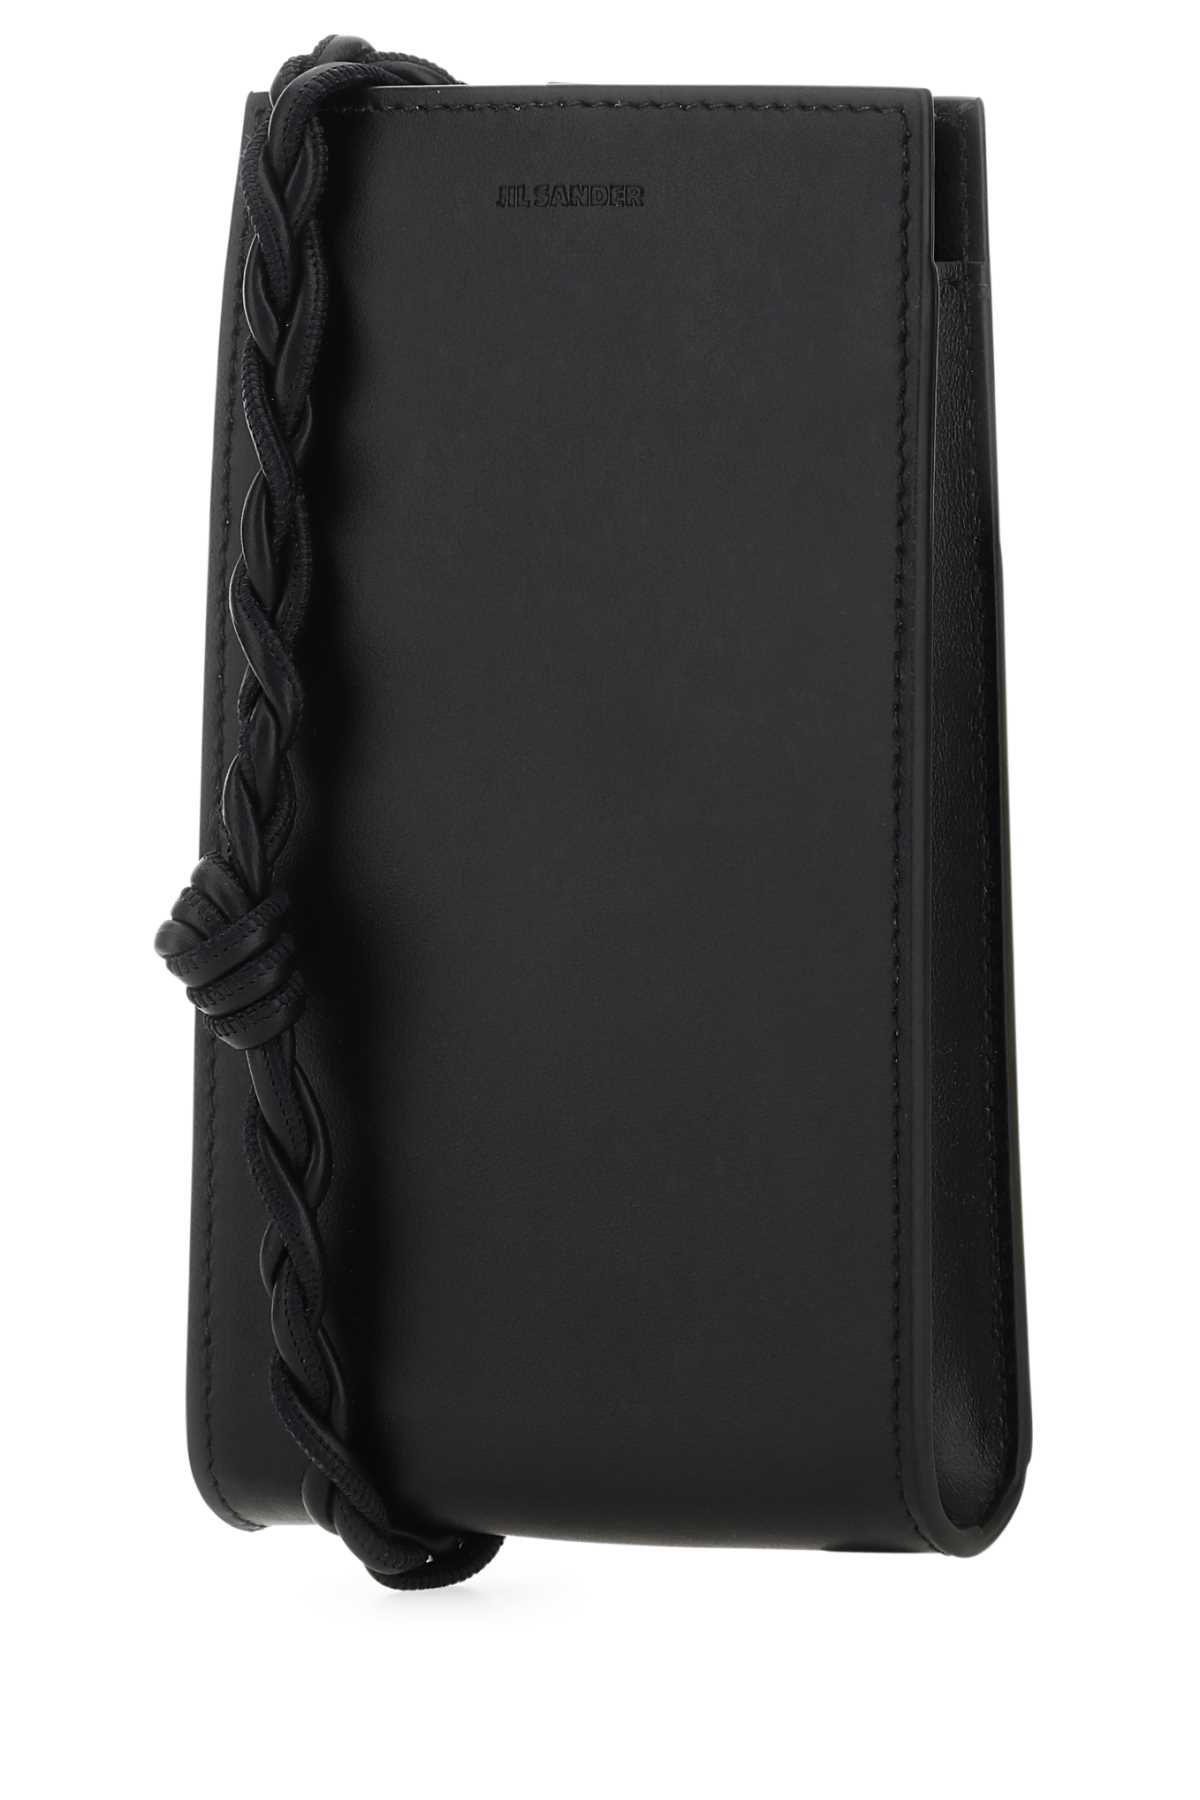 Jil Sander Black Leather Phone Case In 001